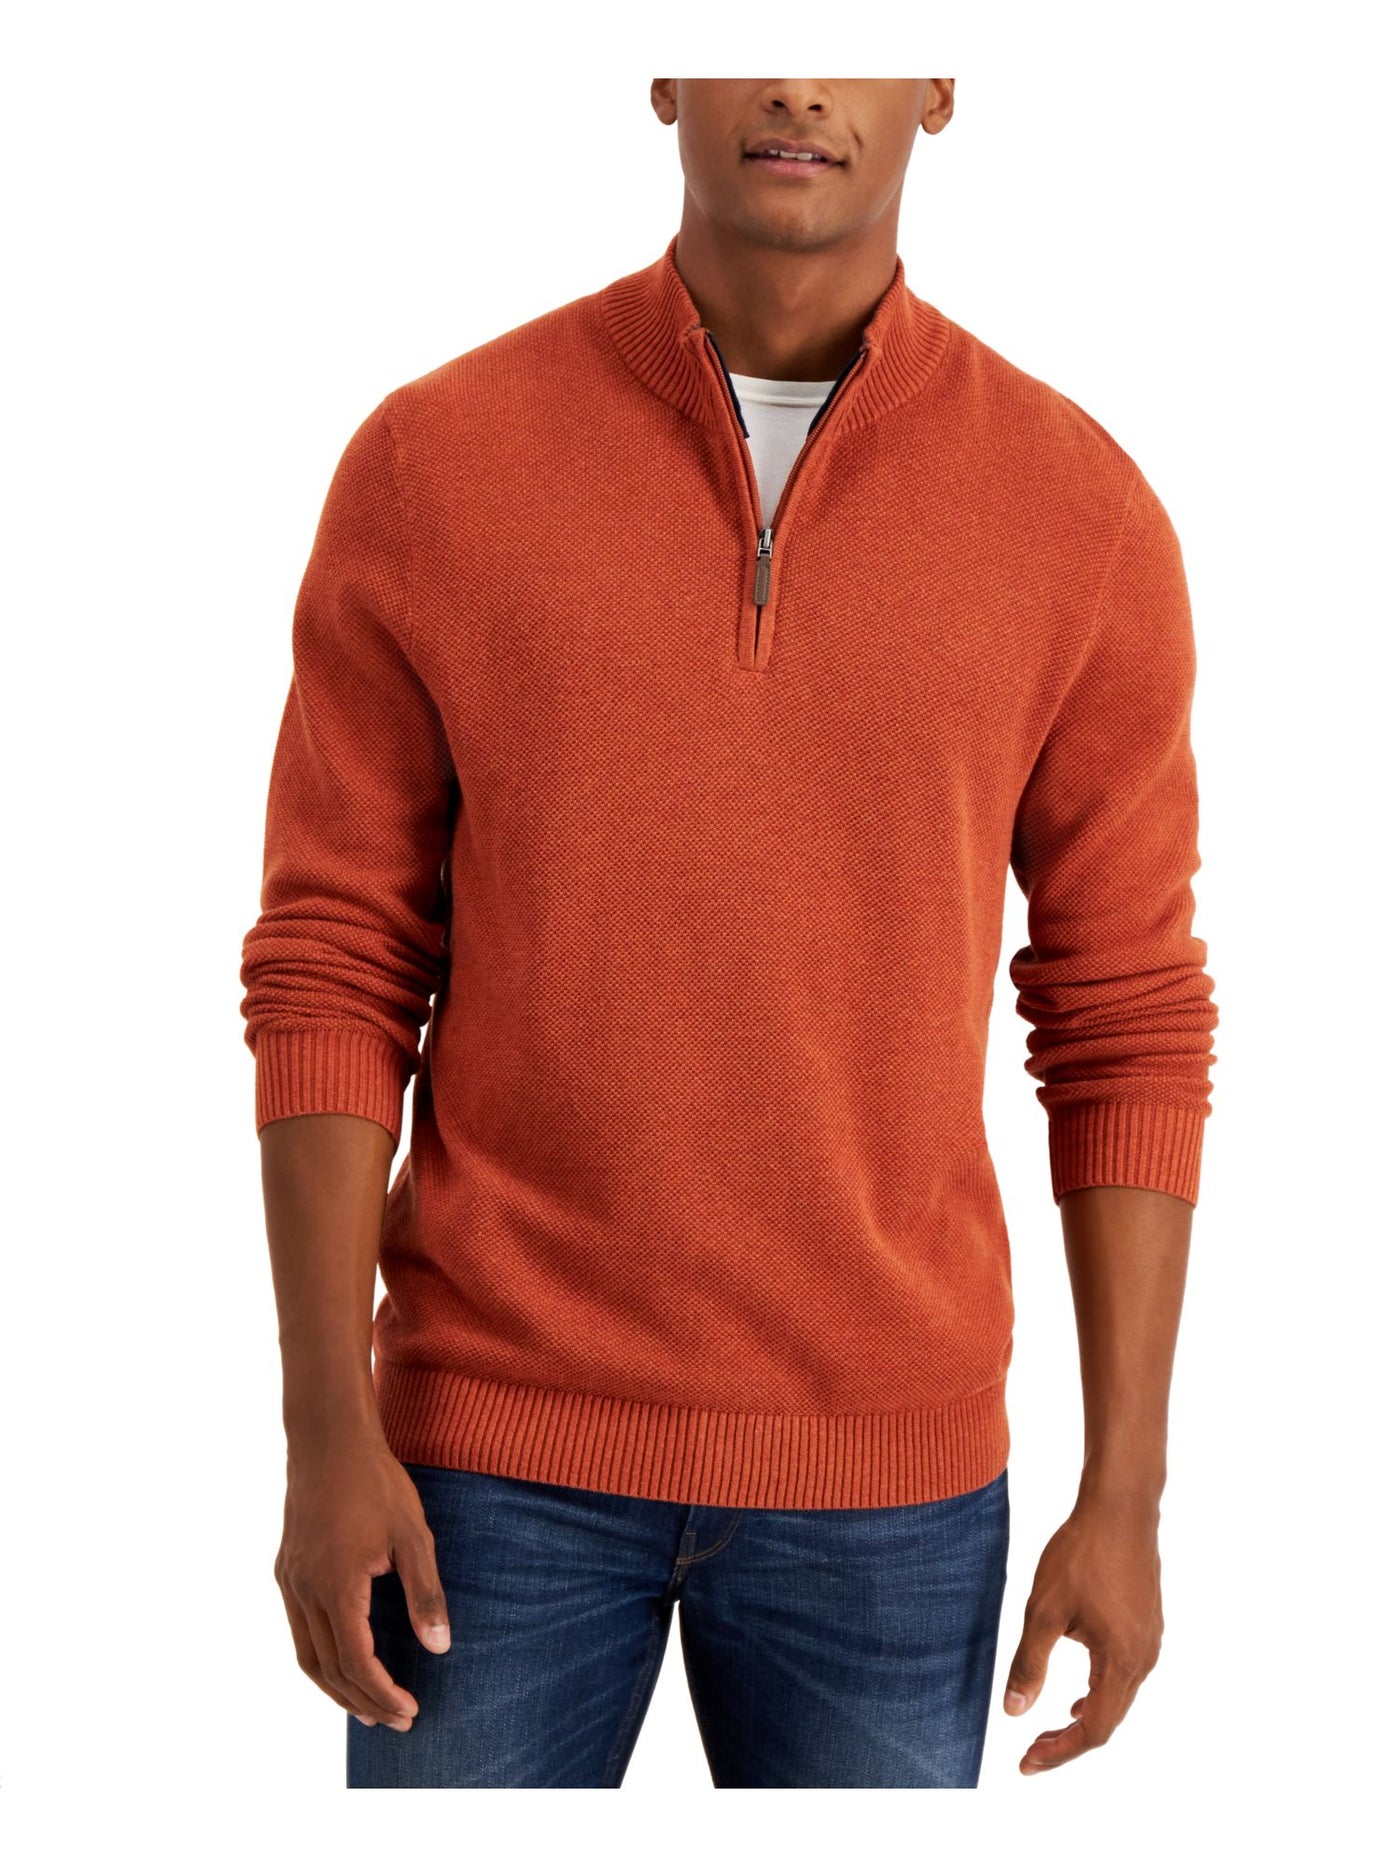 CLUBROOM Mens Orange Stand Collar Quarter-Zip Cotton Pullover Sweater S